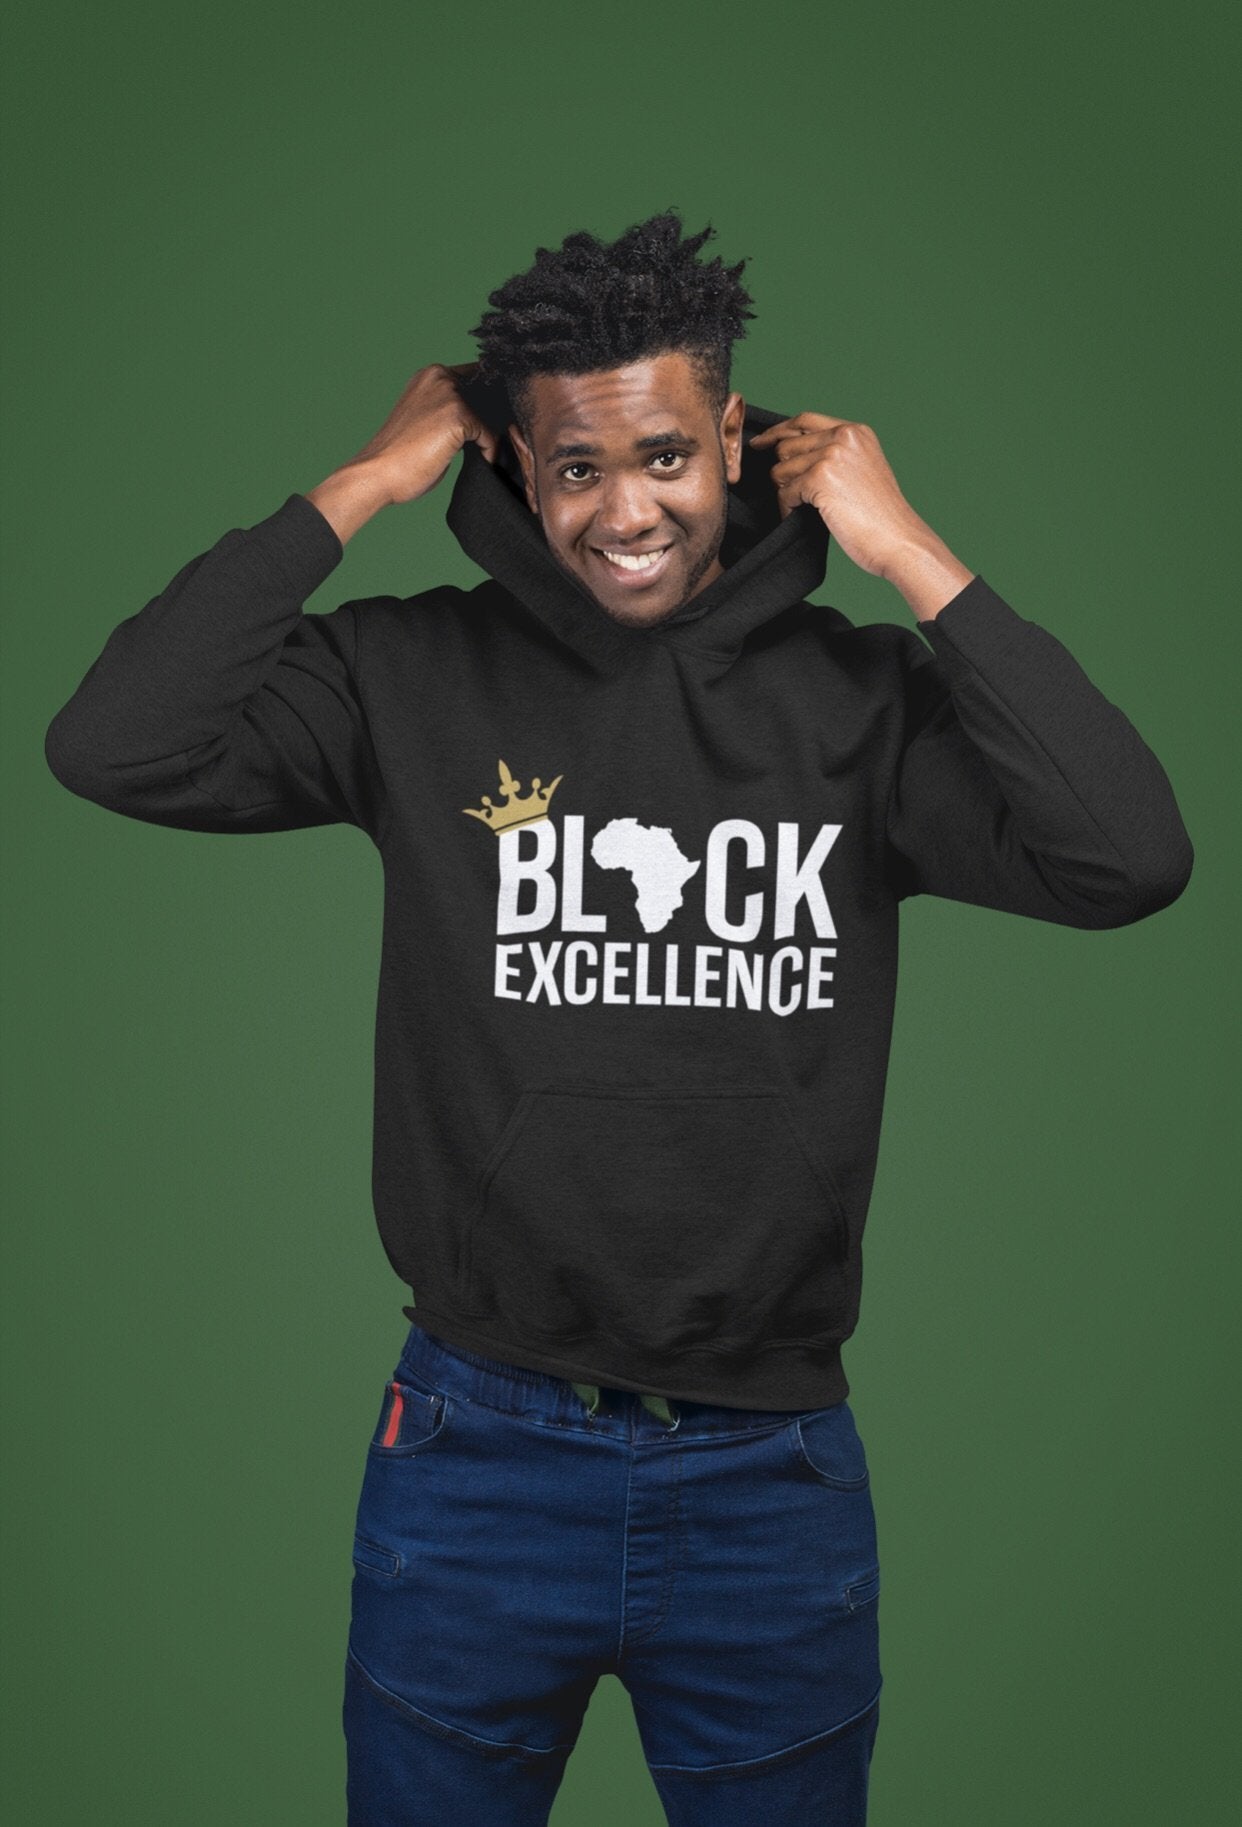 Black Excellence (White) Unisex Hooded Sweatshirt - Chocolate Ancestor